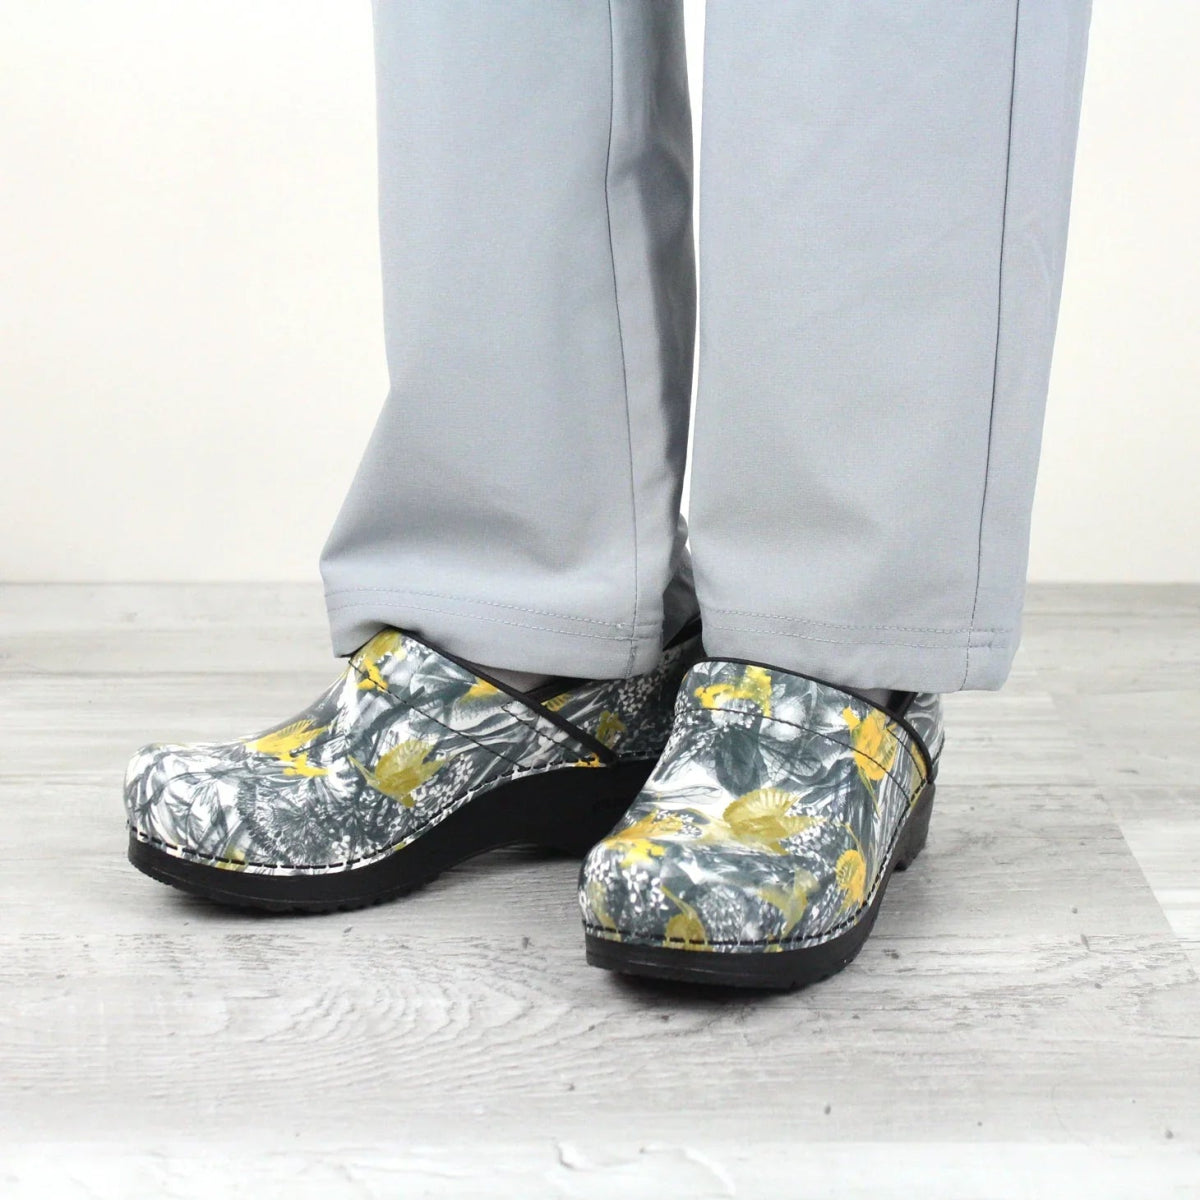 SANITA FLYWAY WOMEN CLOG IN YELLOW/GREY - TLW Shoes